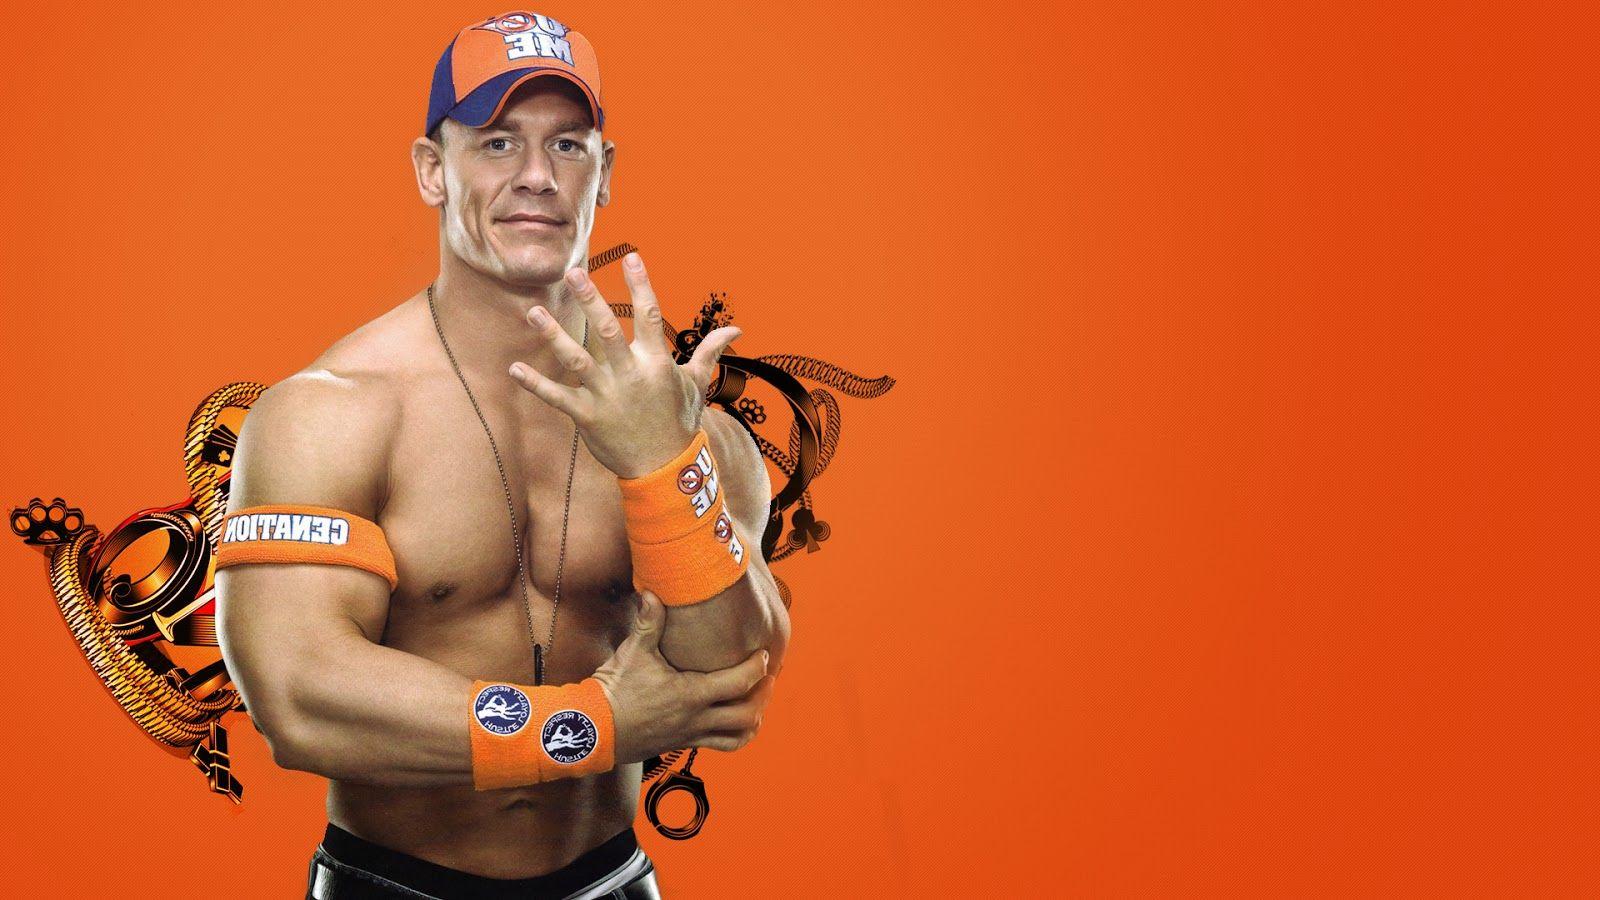 John Cena HD Wallpaper Free Download. WWE HD WALLPAPER FREE DOWNLOAD